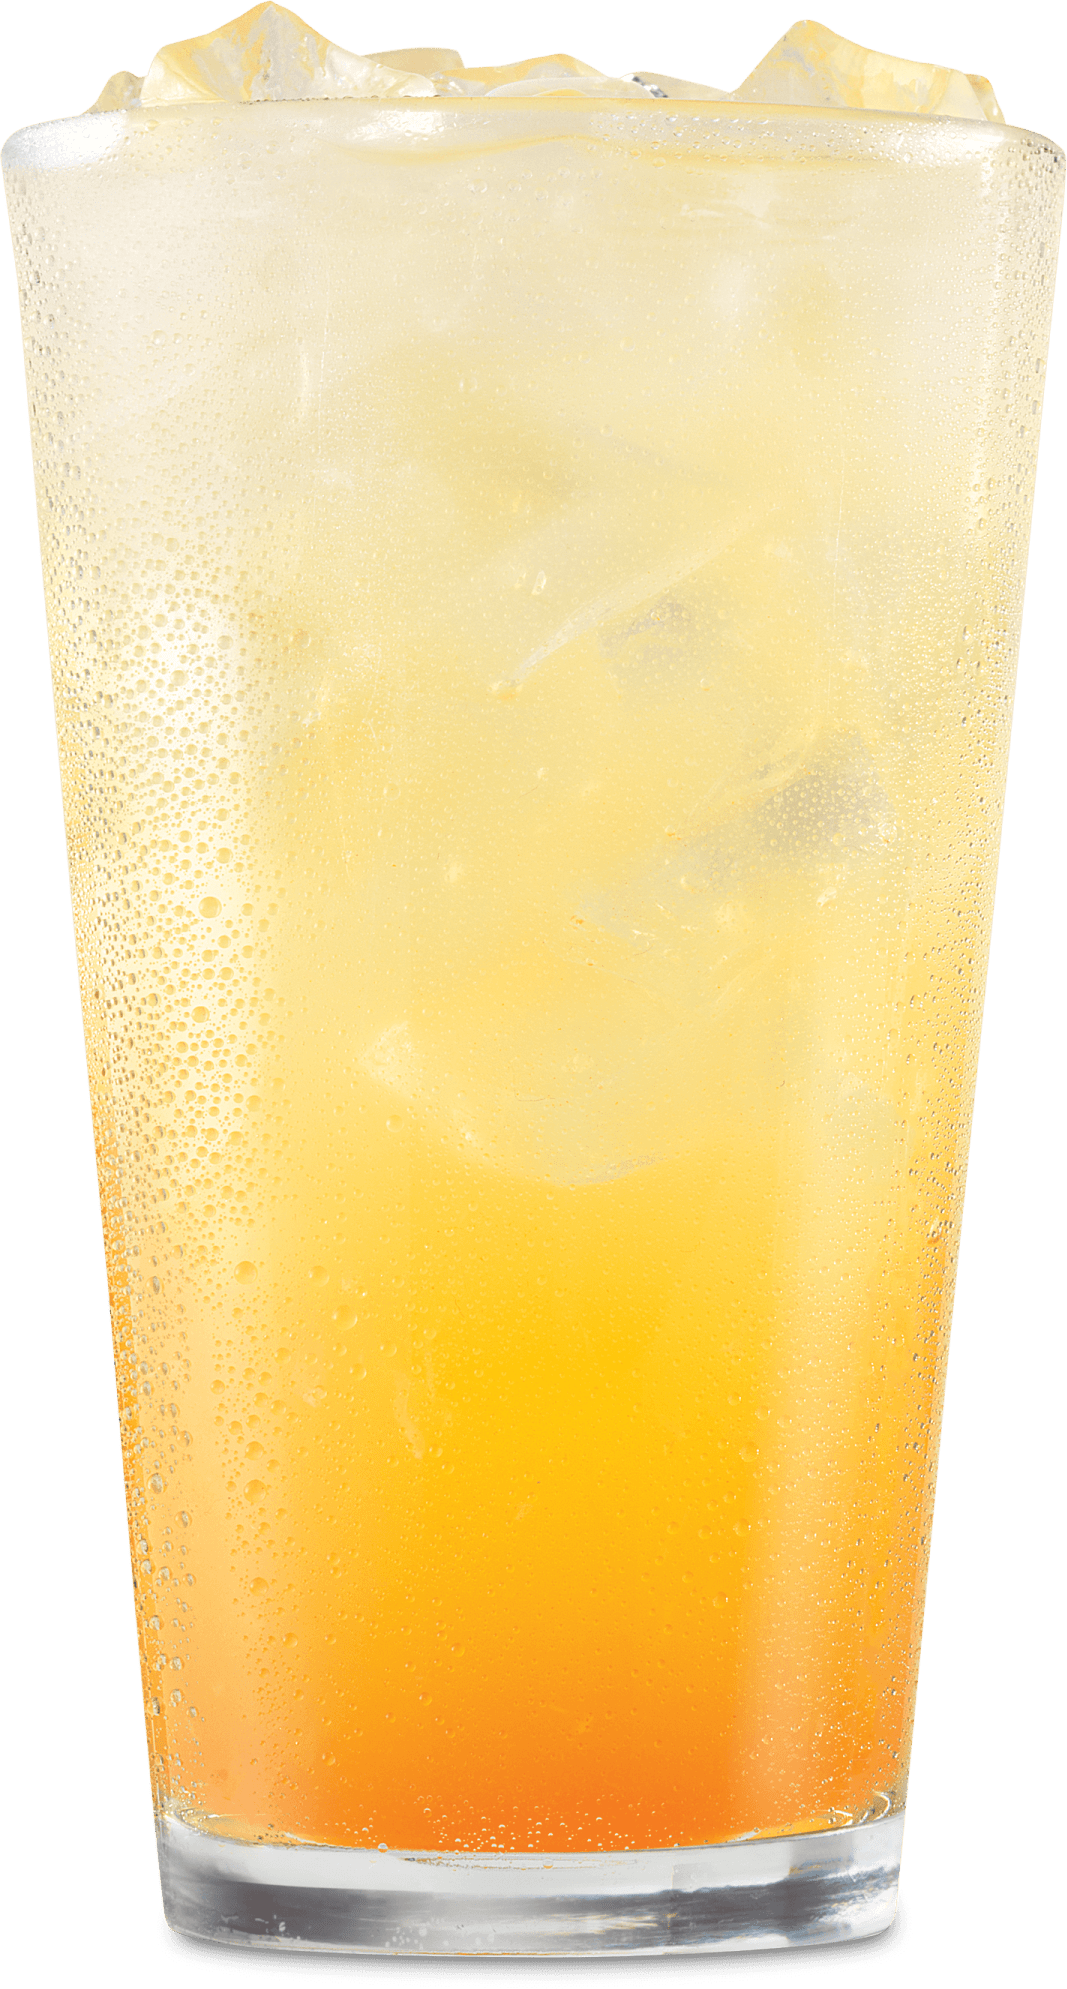 Arby's Medium Peach Lemonade Nutrition Facts